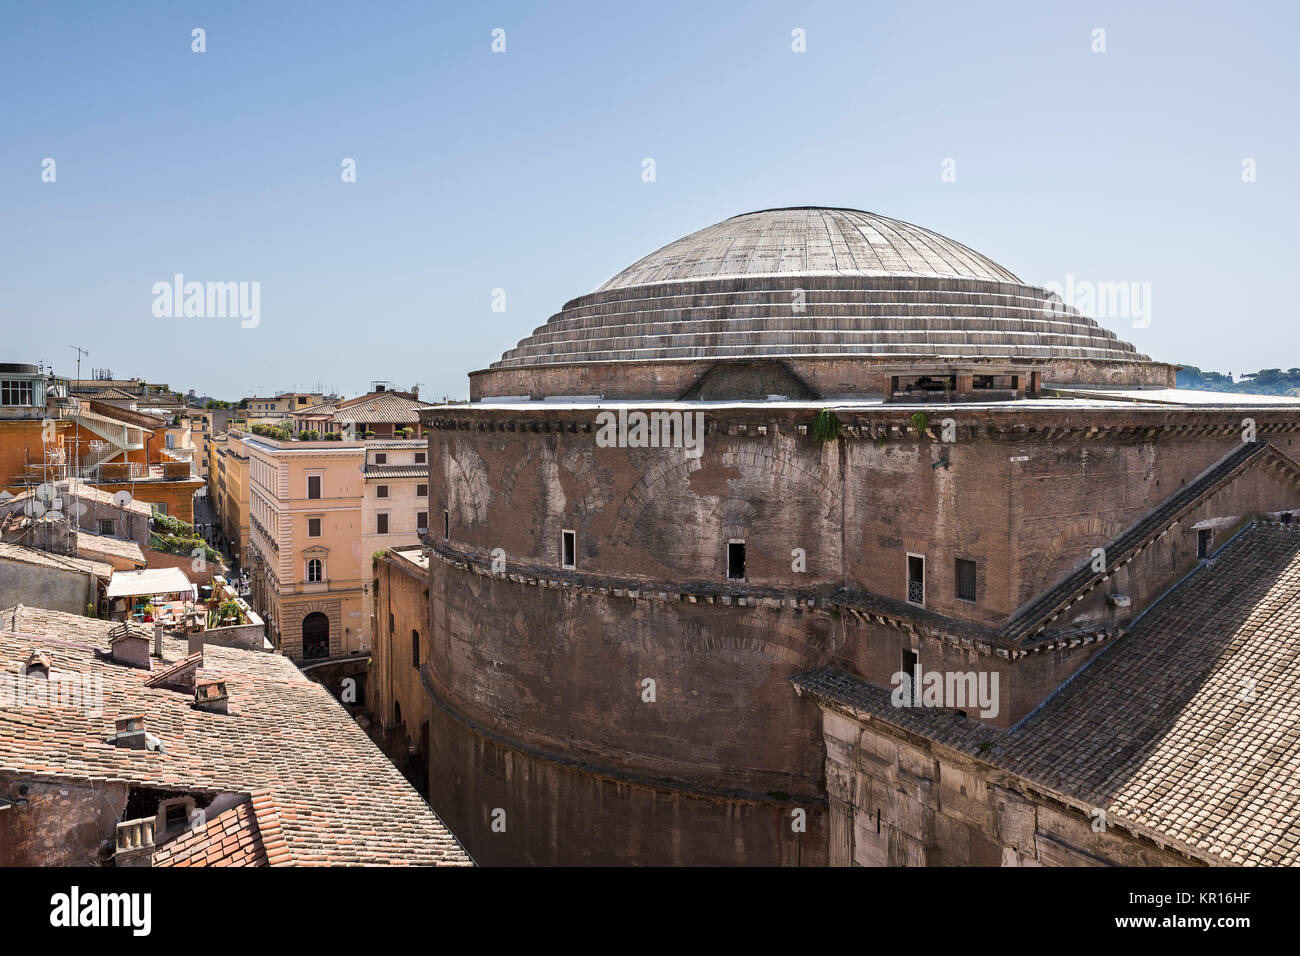 Vista exterior del panteón romano Roma Italia Foto de stock